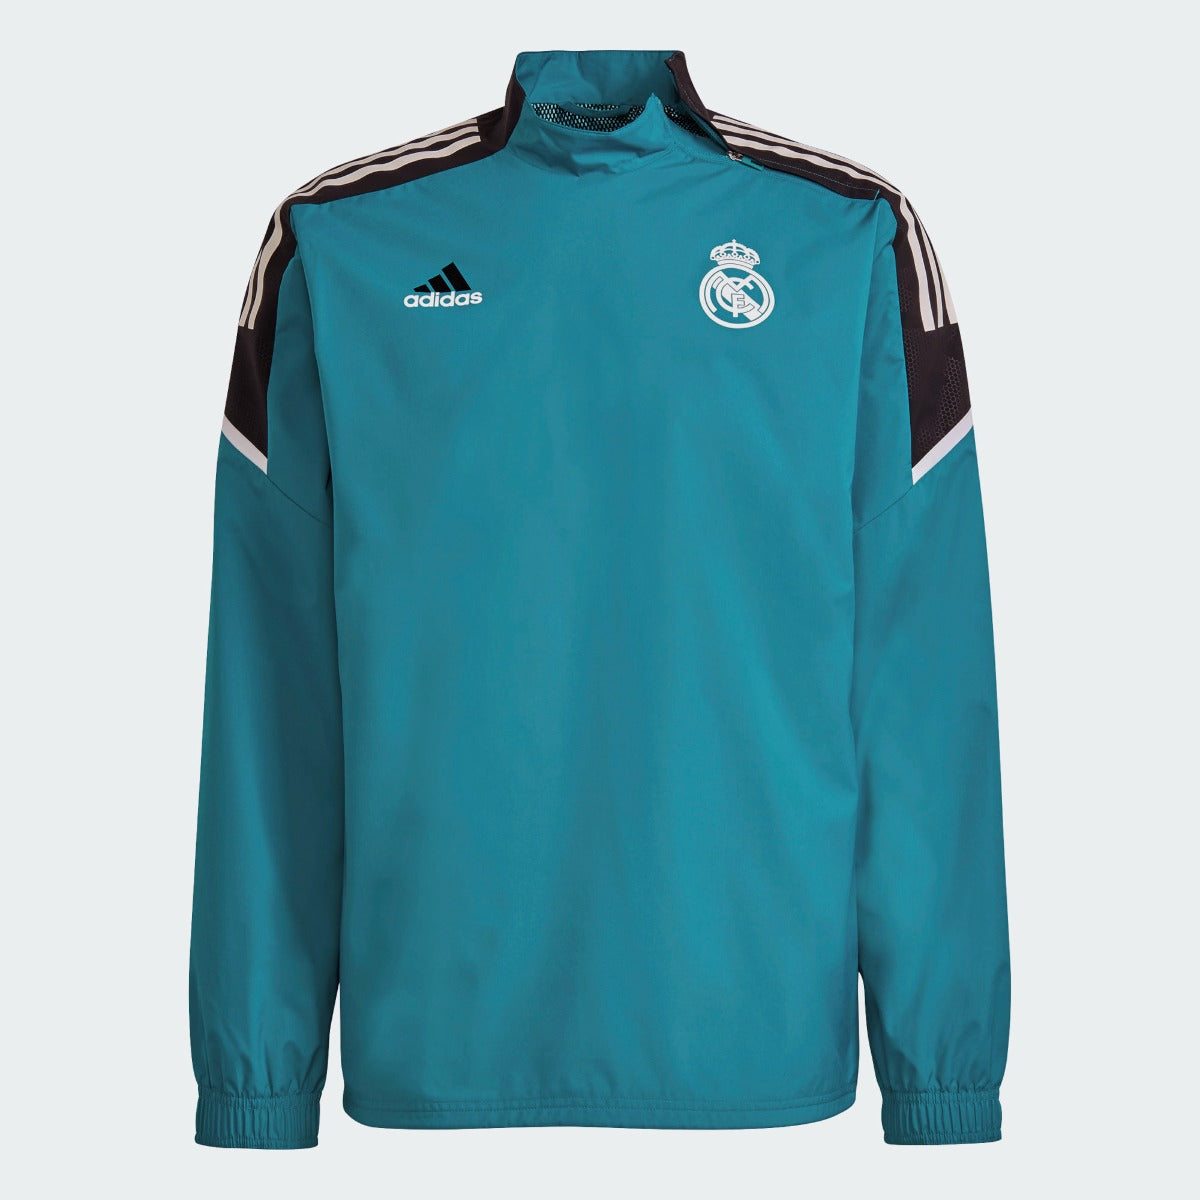 Adidas 2021-22 Real Madrid EU Hybrid Top - Teal-Black (Front)